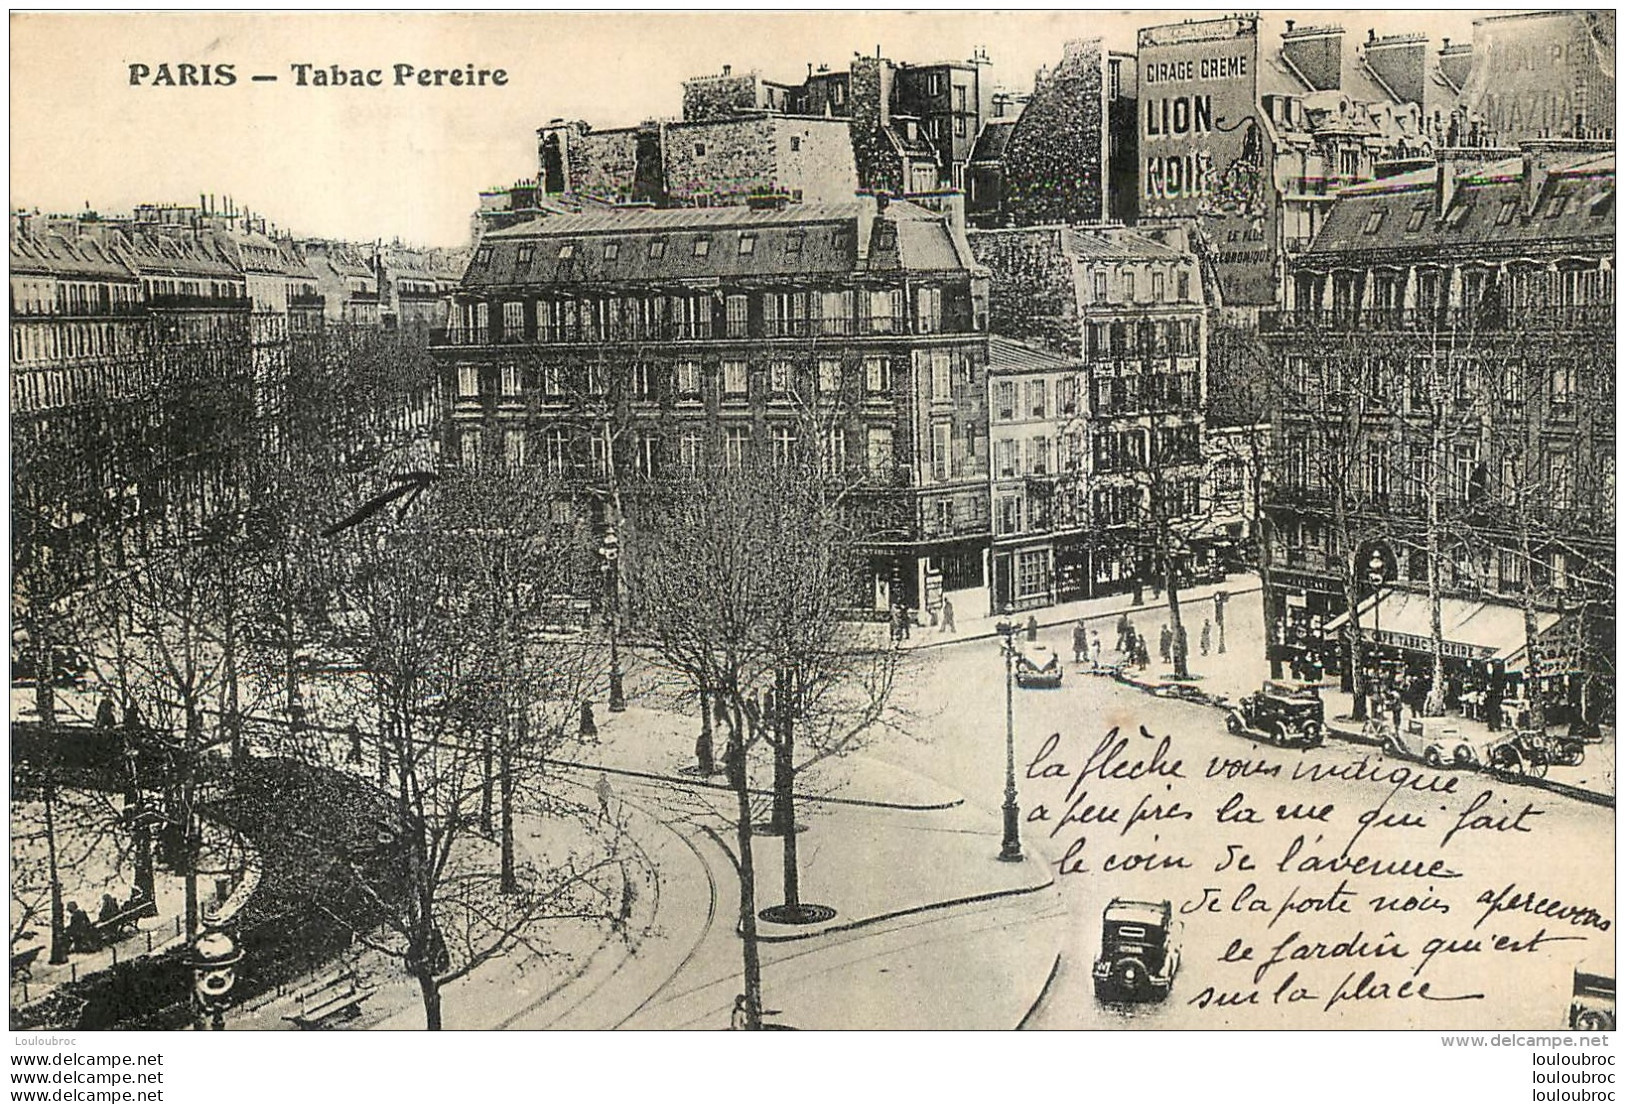 PARIS XVII TABAC PEREIRE - District 17